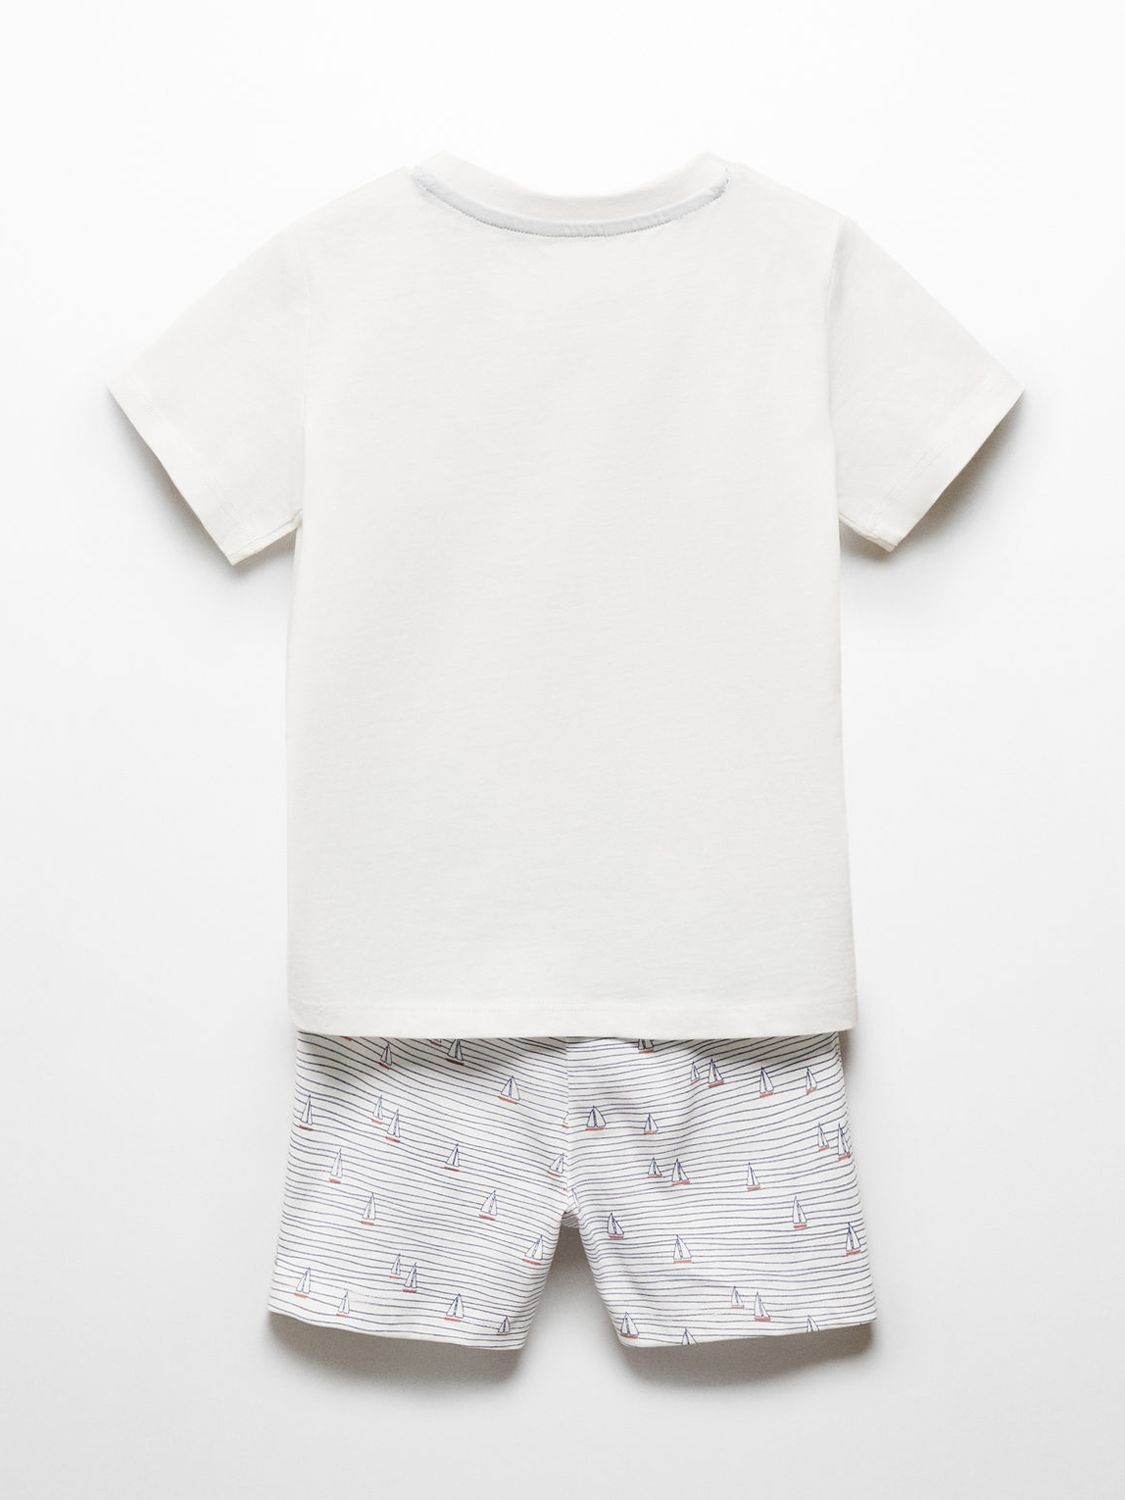 Mango Baby Maresme Sail Boat Print T-Shirt & Shorts Pyjamas Set, Natural White, 12-18 months